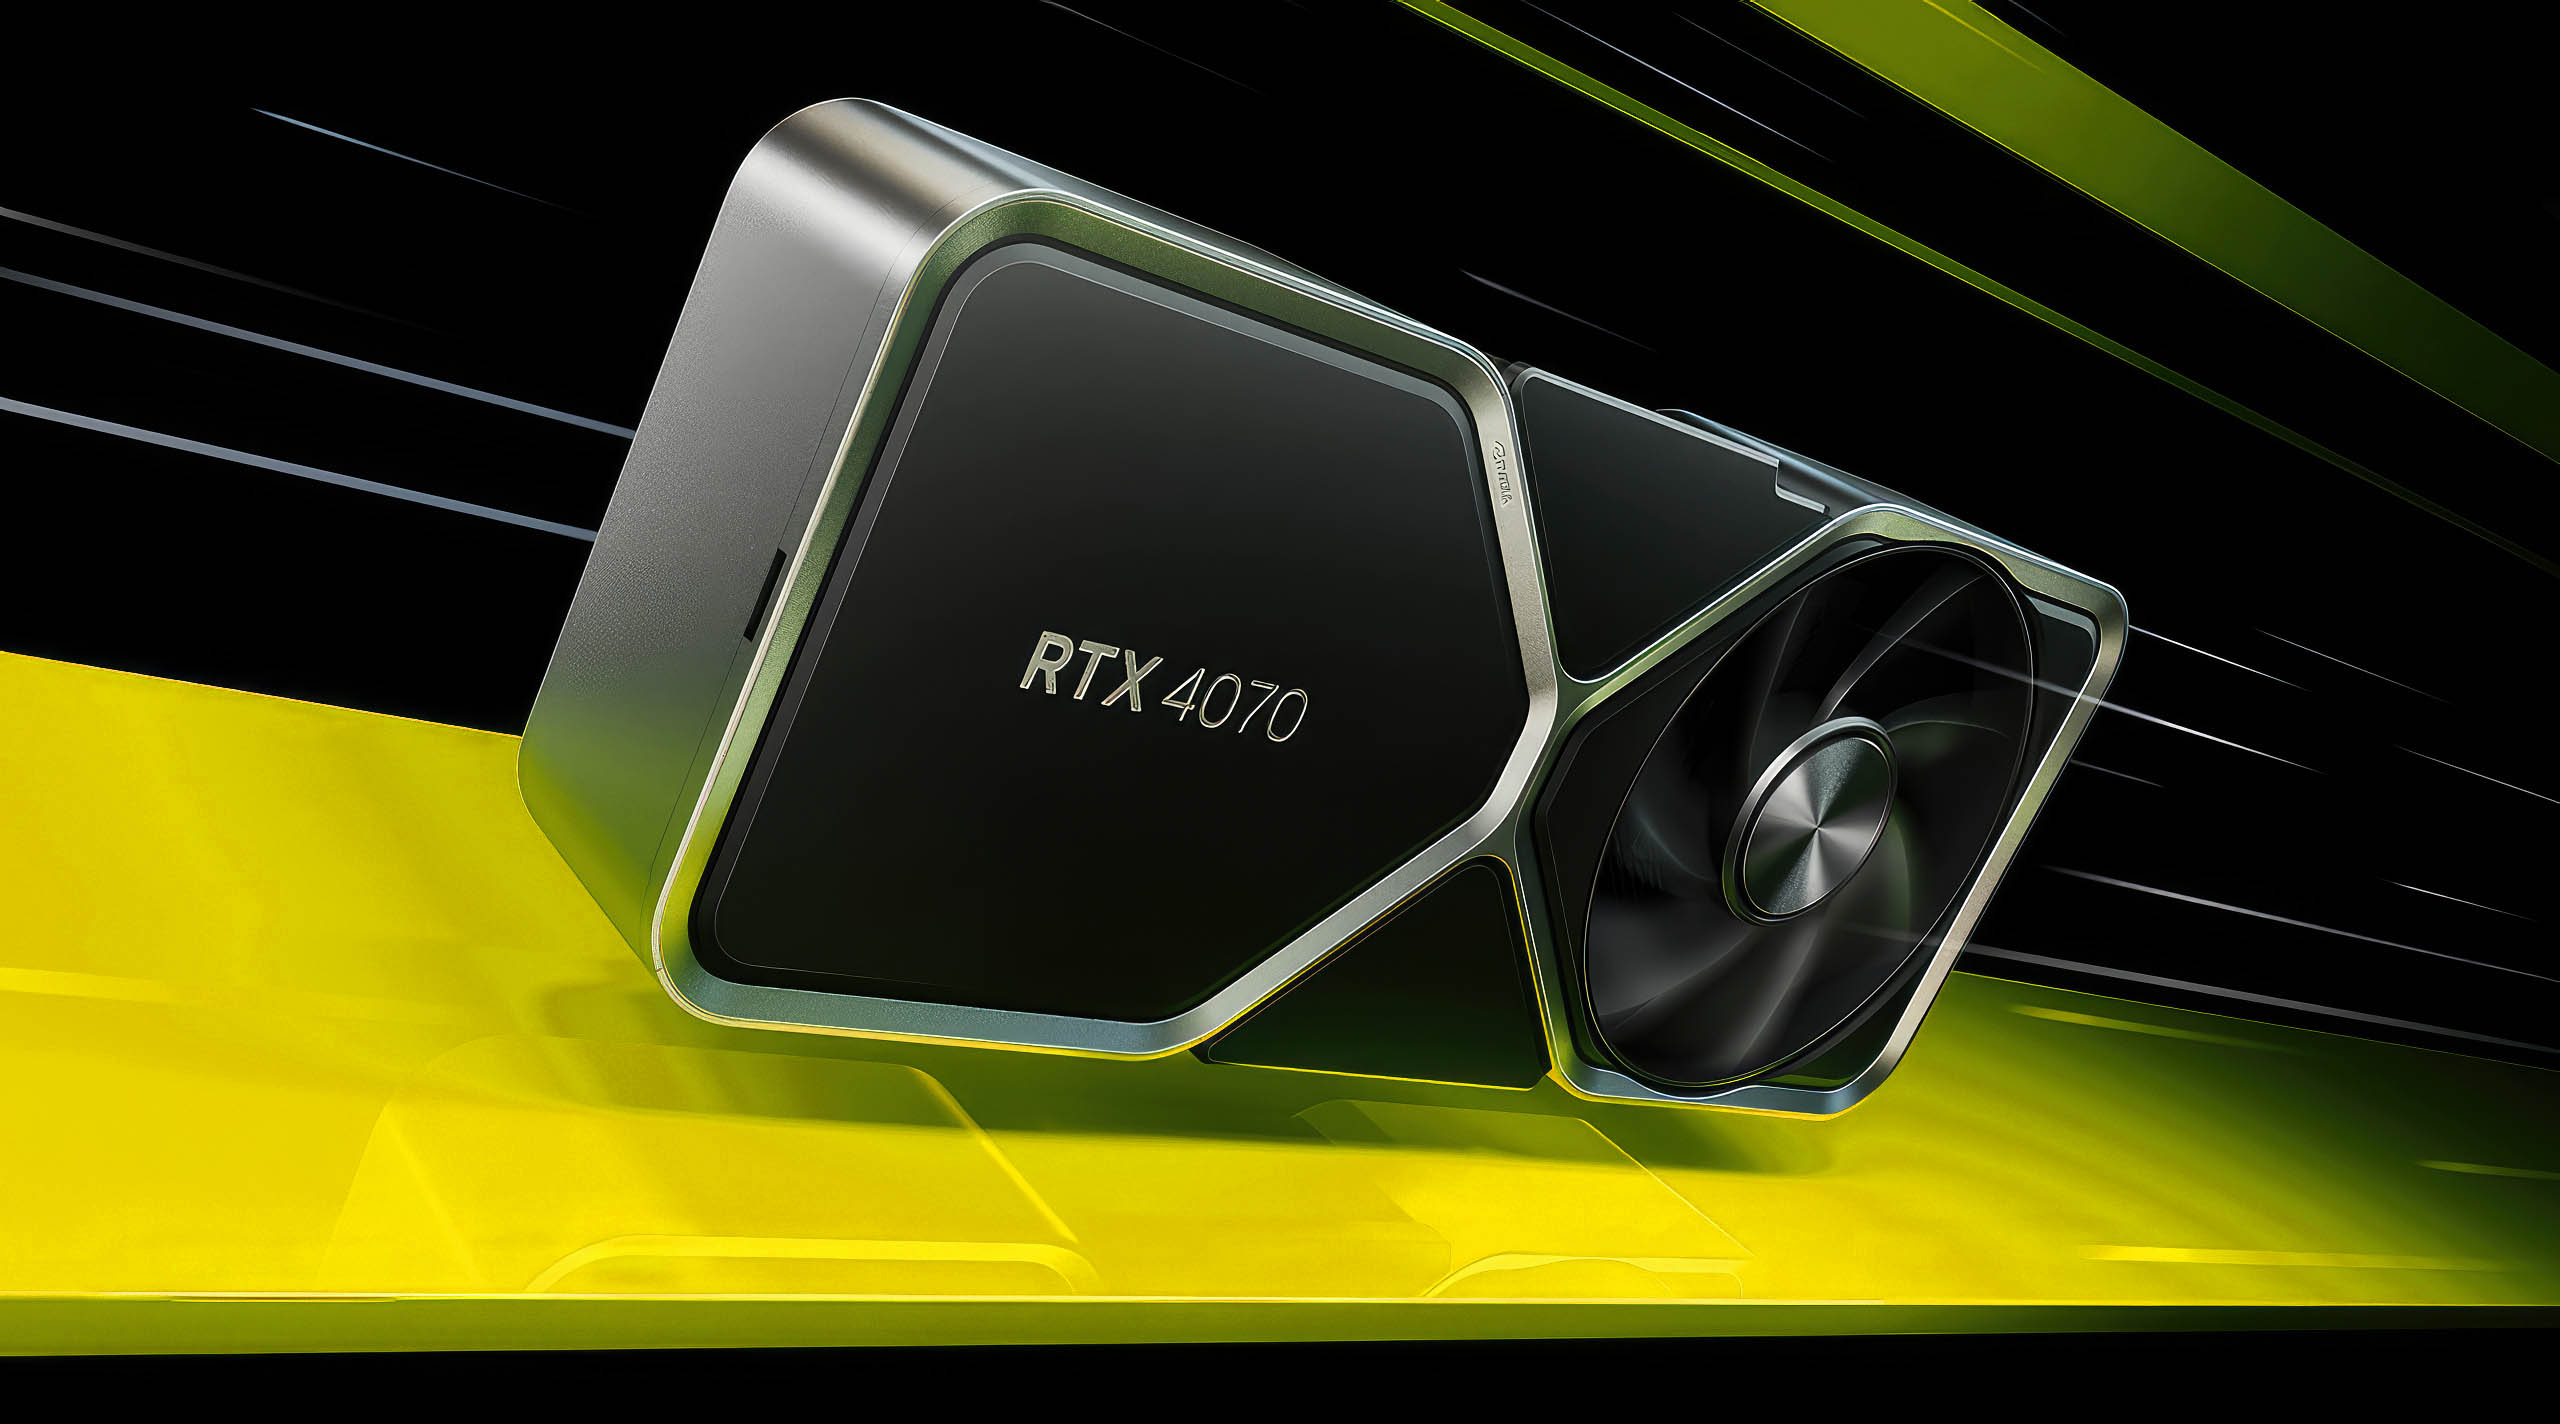 Nvidia RTX 4070 Ti Super review: not very super - The Verge